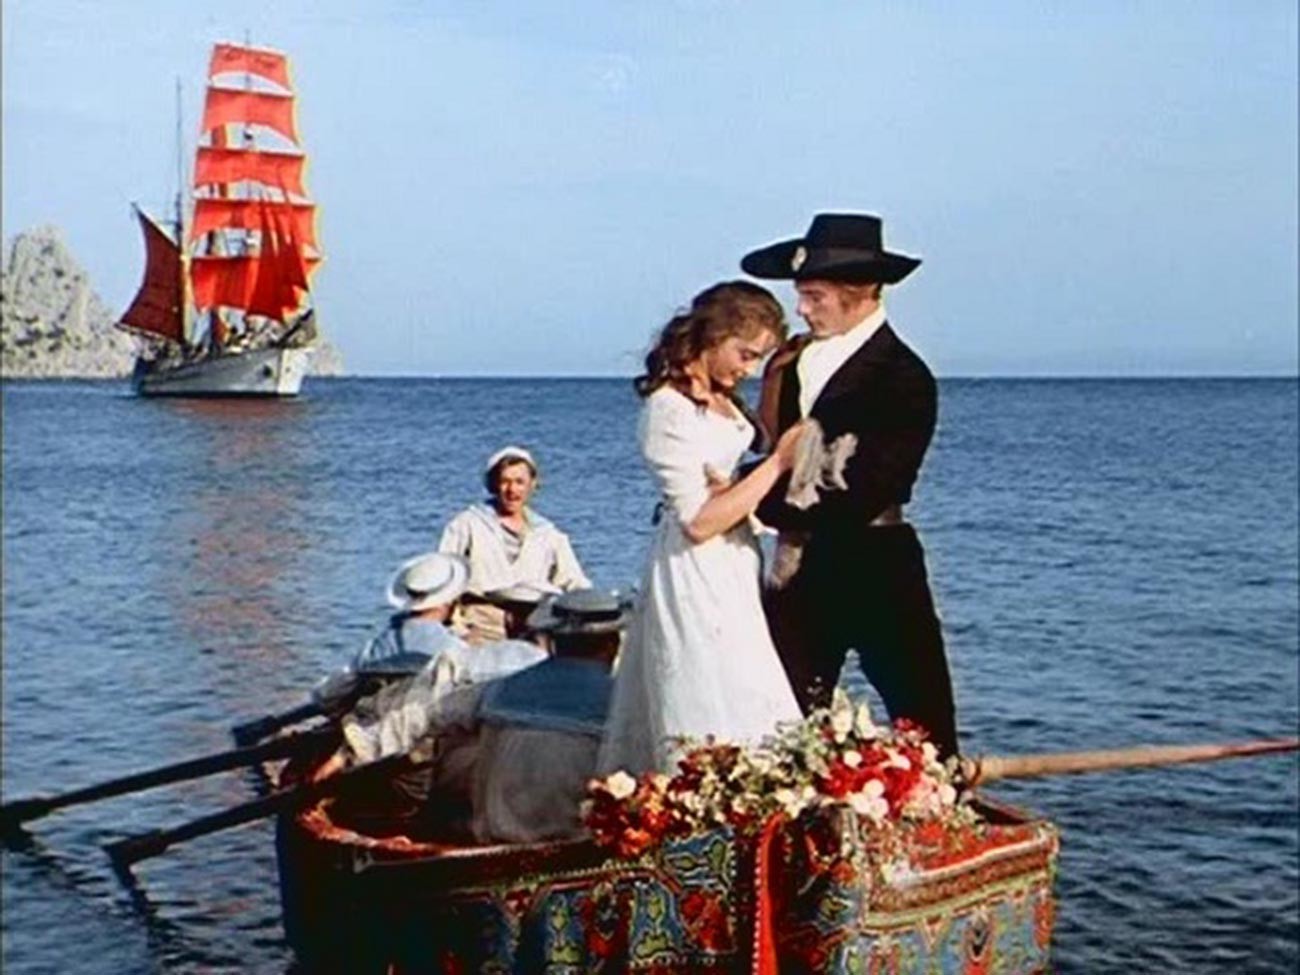 A still from 'Scarlet Sails' movie